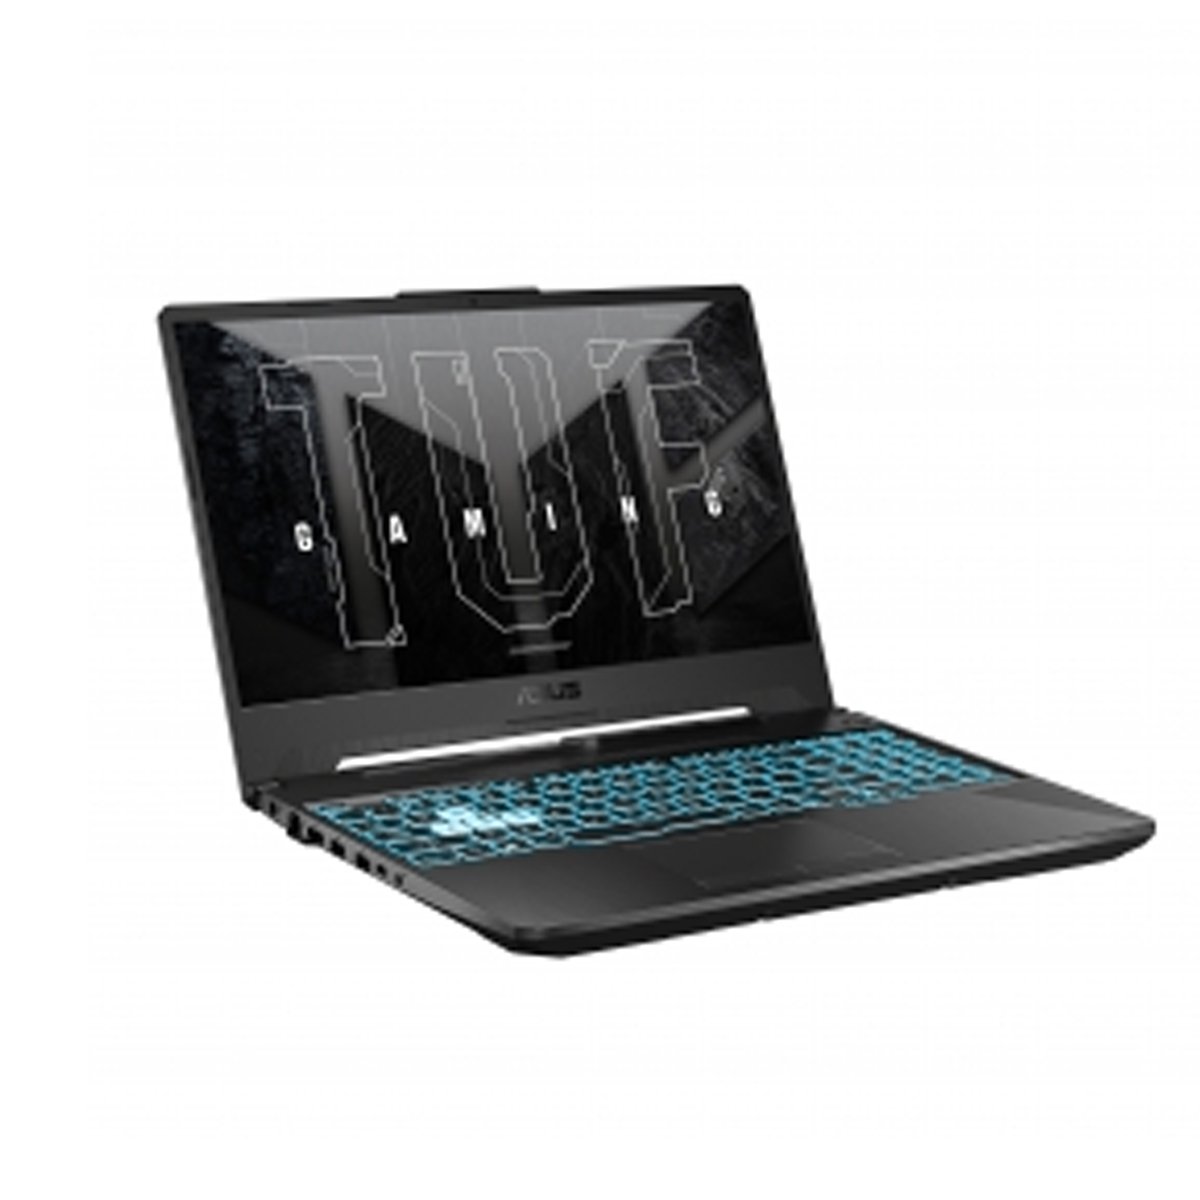 ASUS TUF Core i5 Gaming Laptop FX506HC-WS53,15.6" FHD,8GB RAM,512GB SSD,Windows 10 Home,Graphite Black